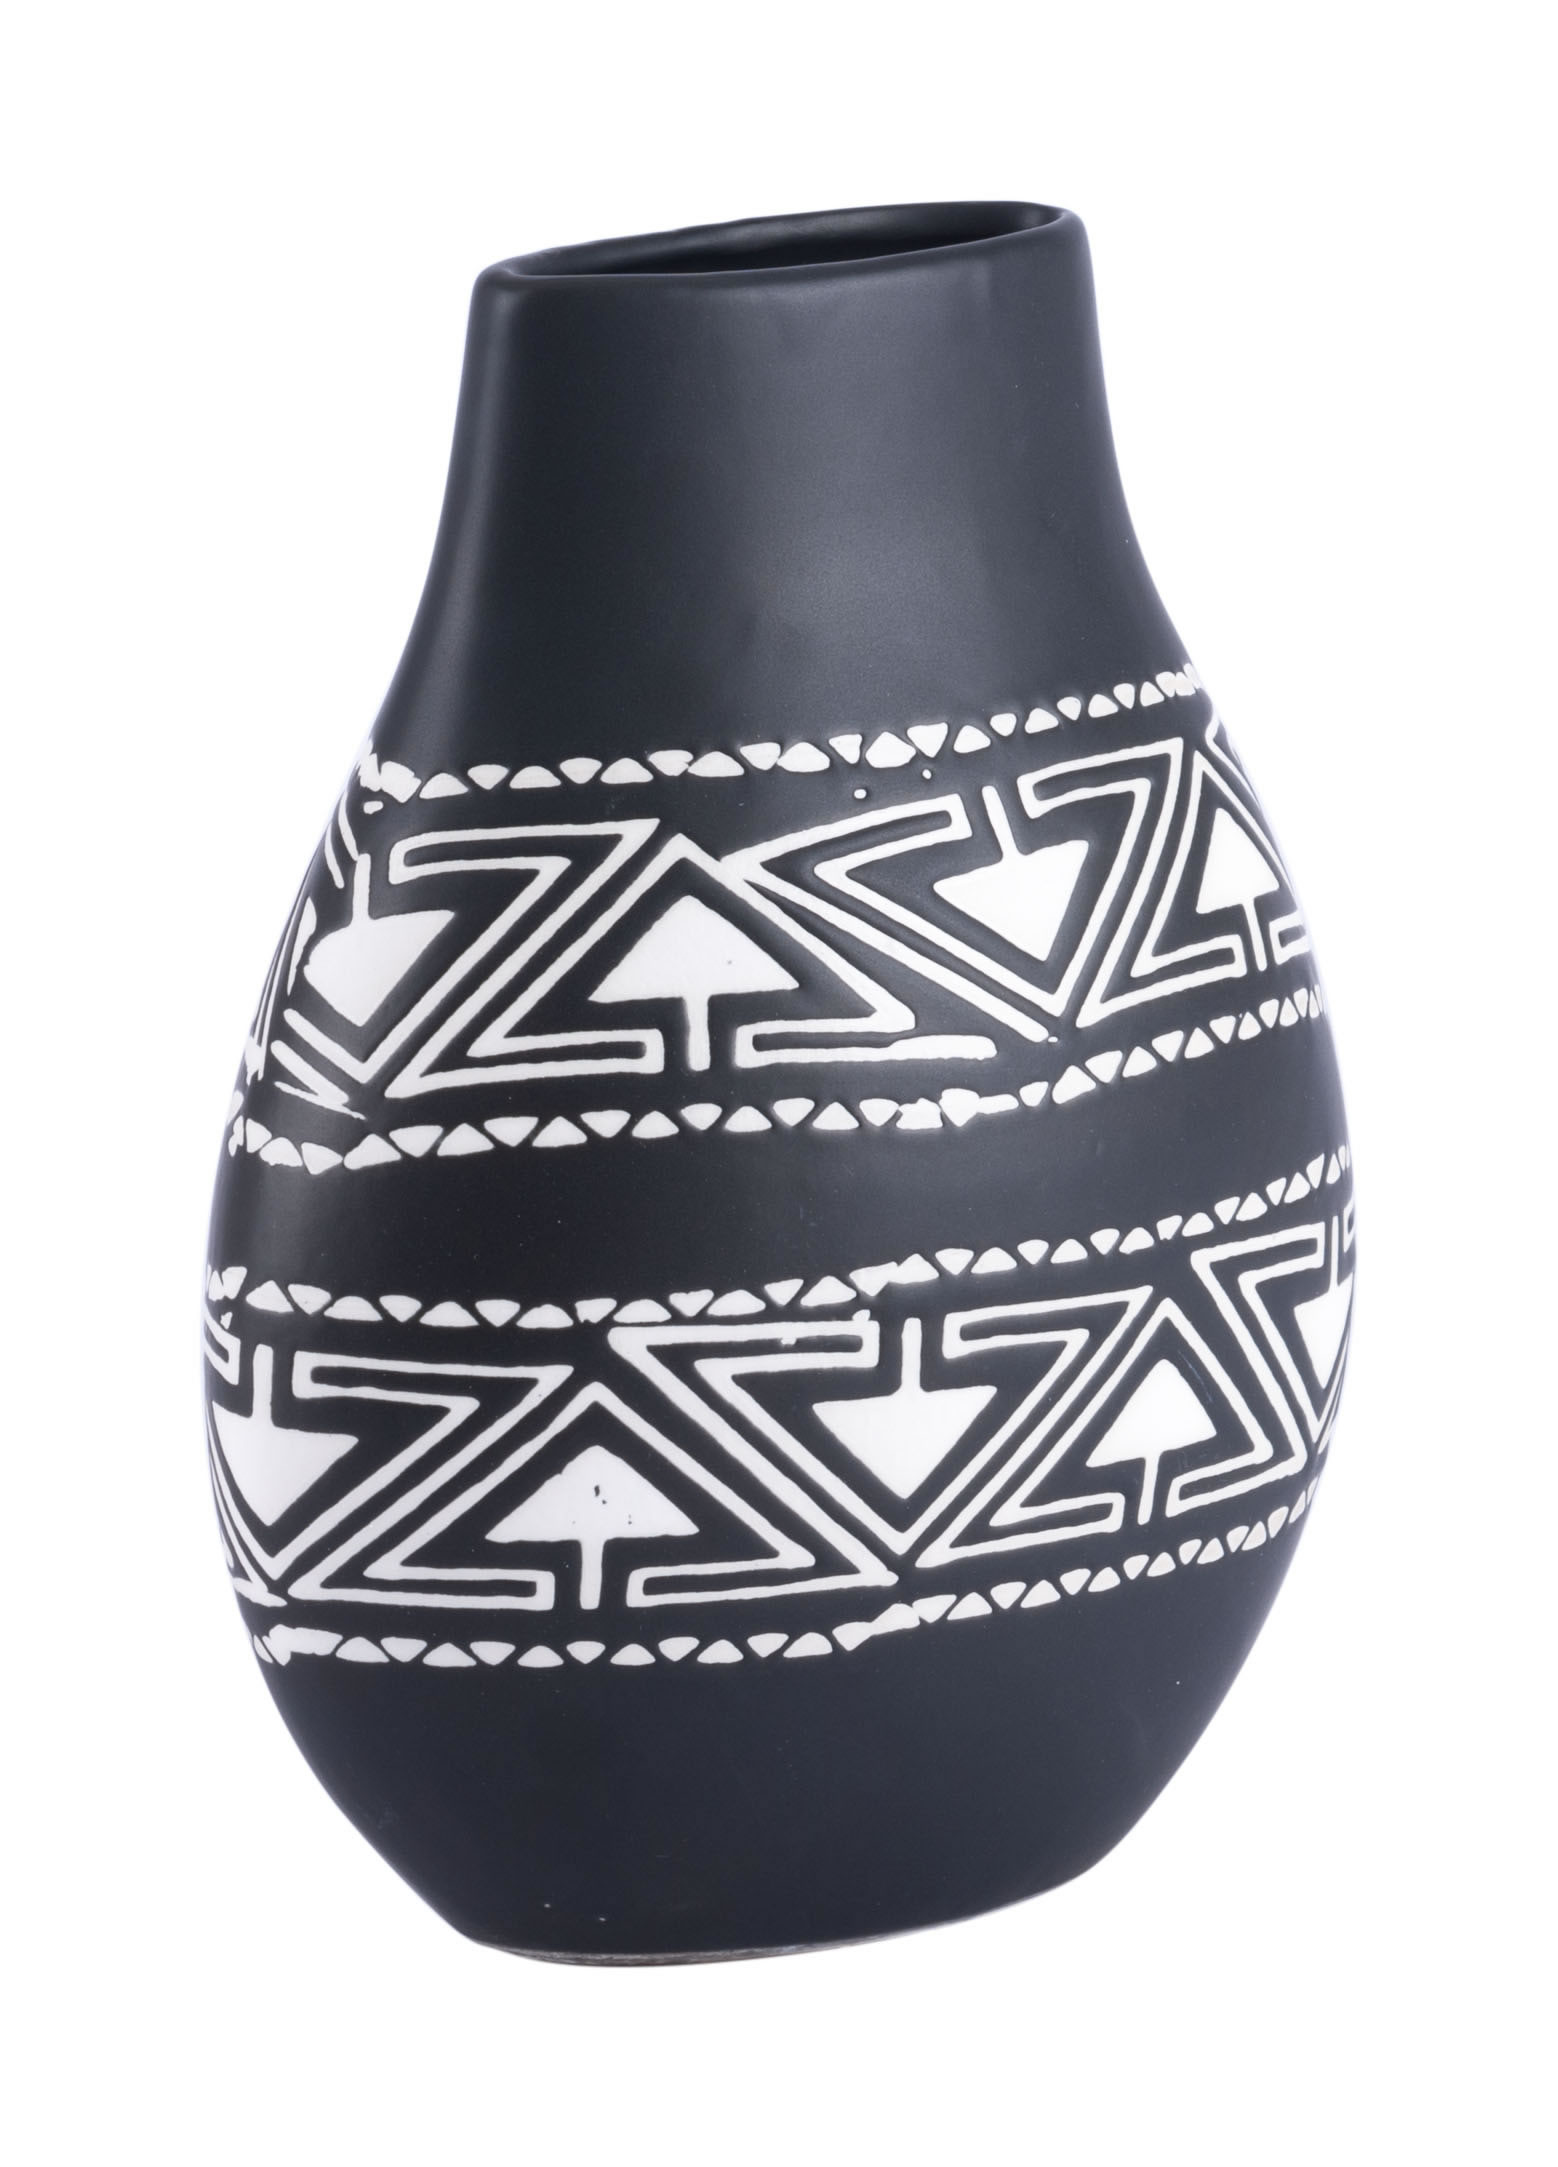 7.5" x 4.1" x 9.3" Black & White, Ceramic, Small Vase